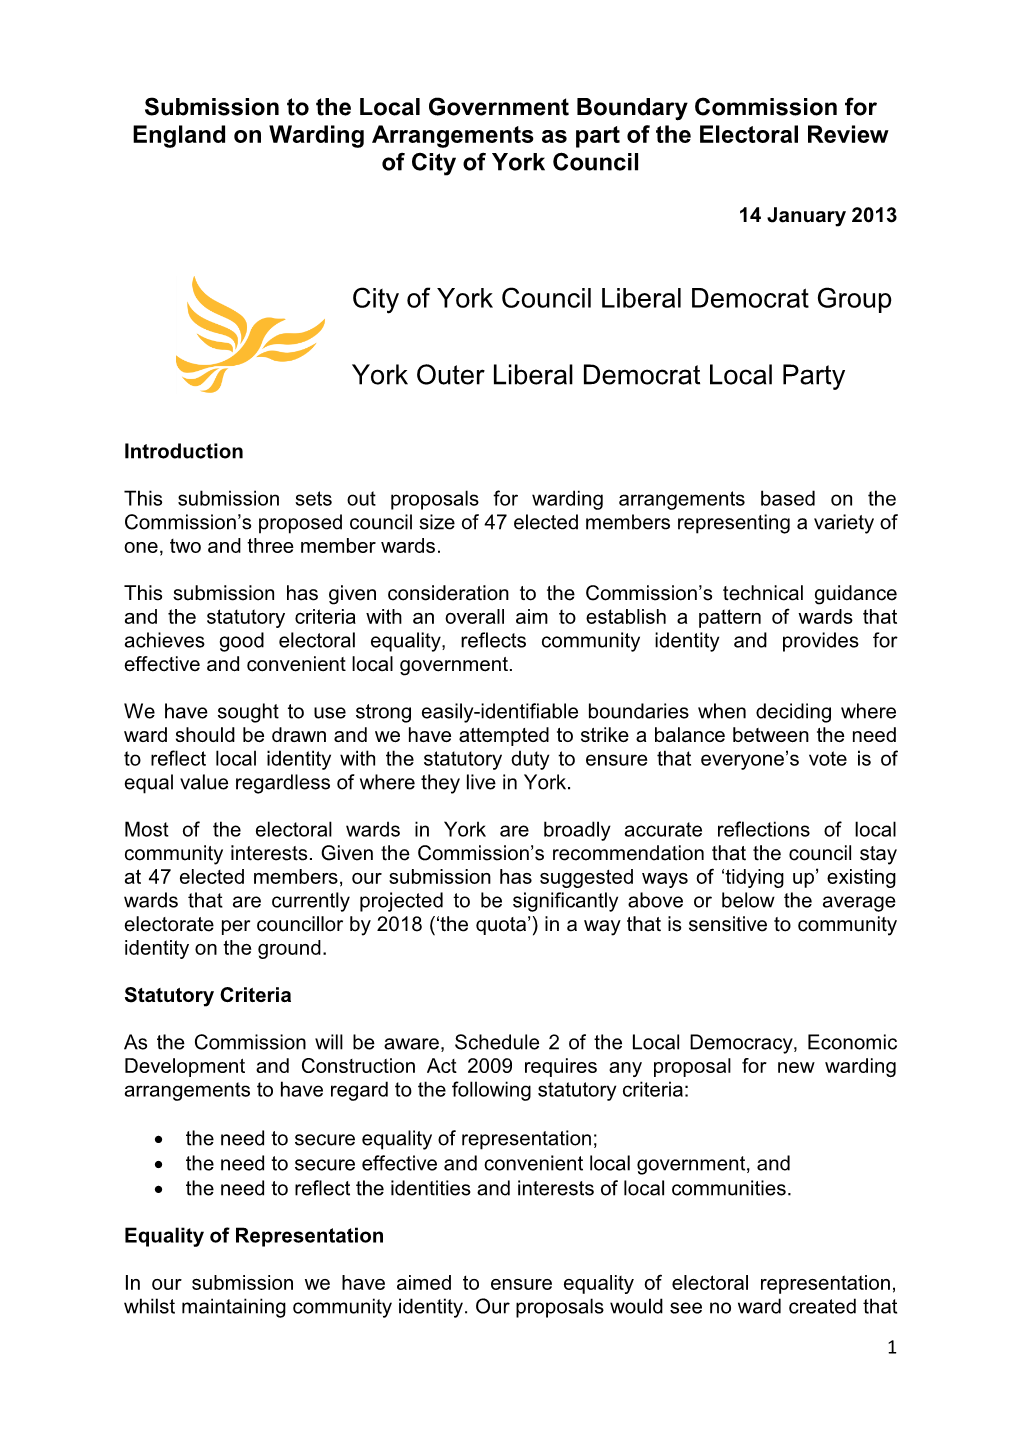 York Outer Liberal Democrats